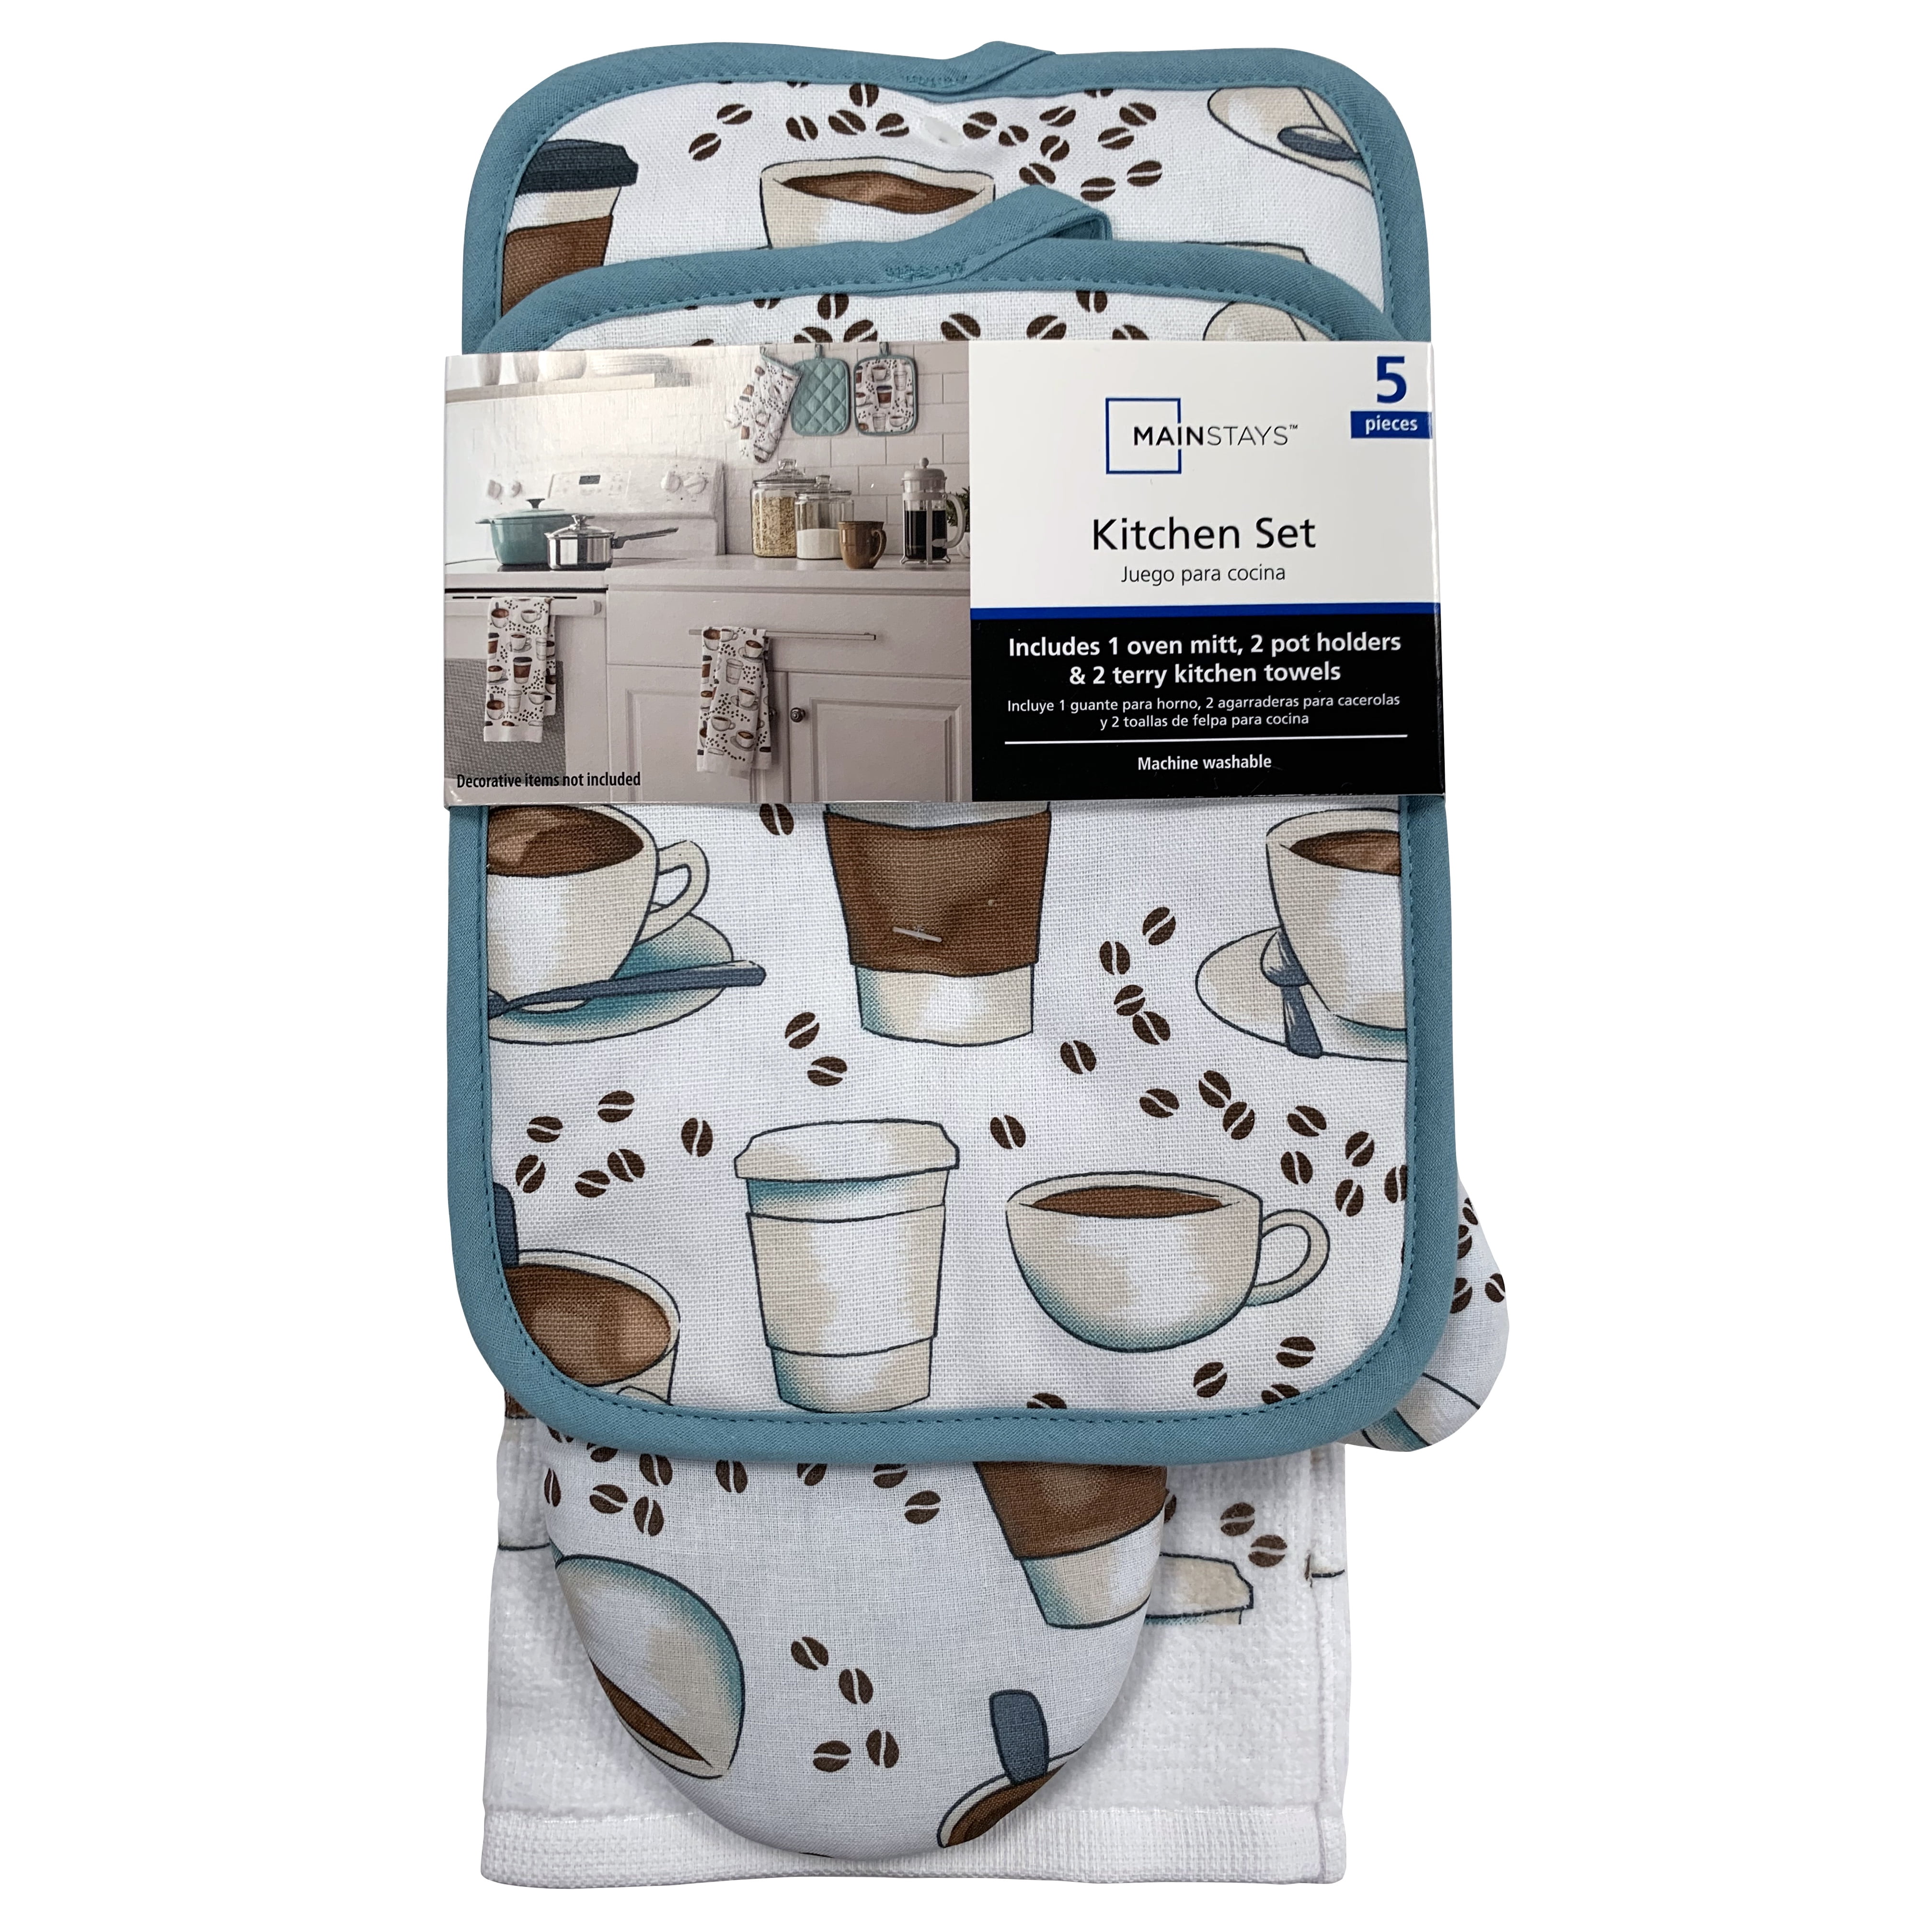 Hanging Towel Kit - Coffee Always - Cream